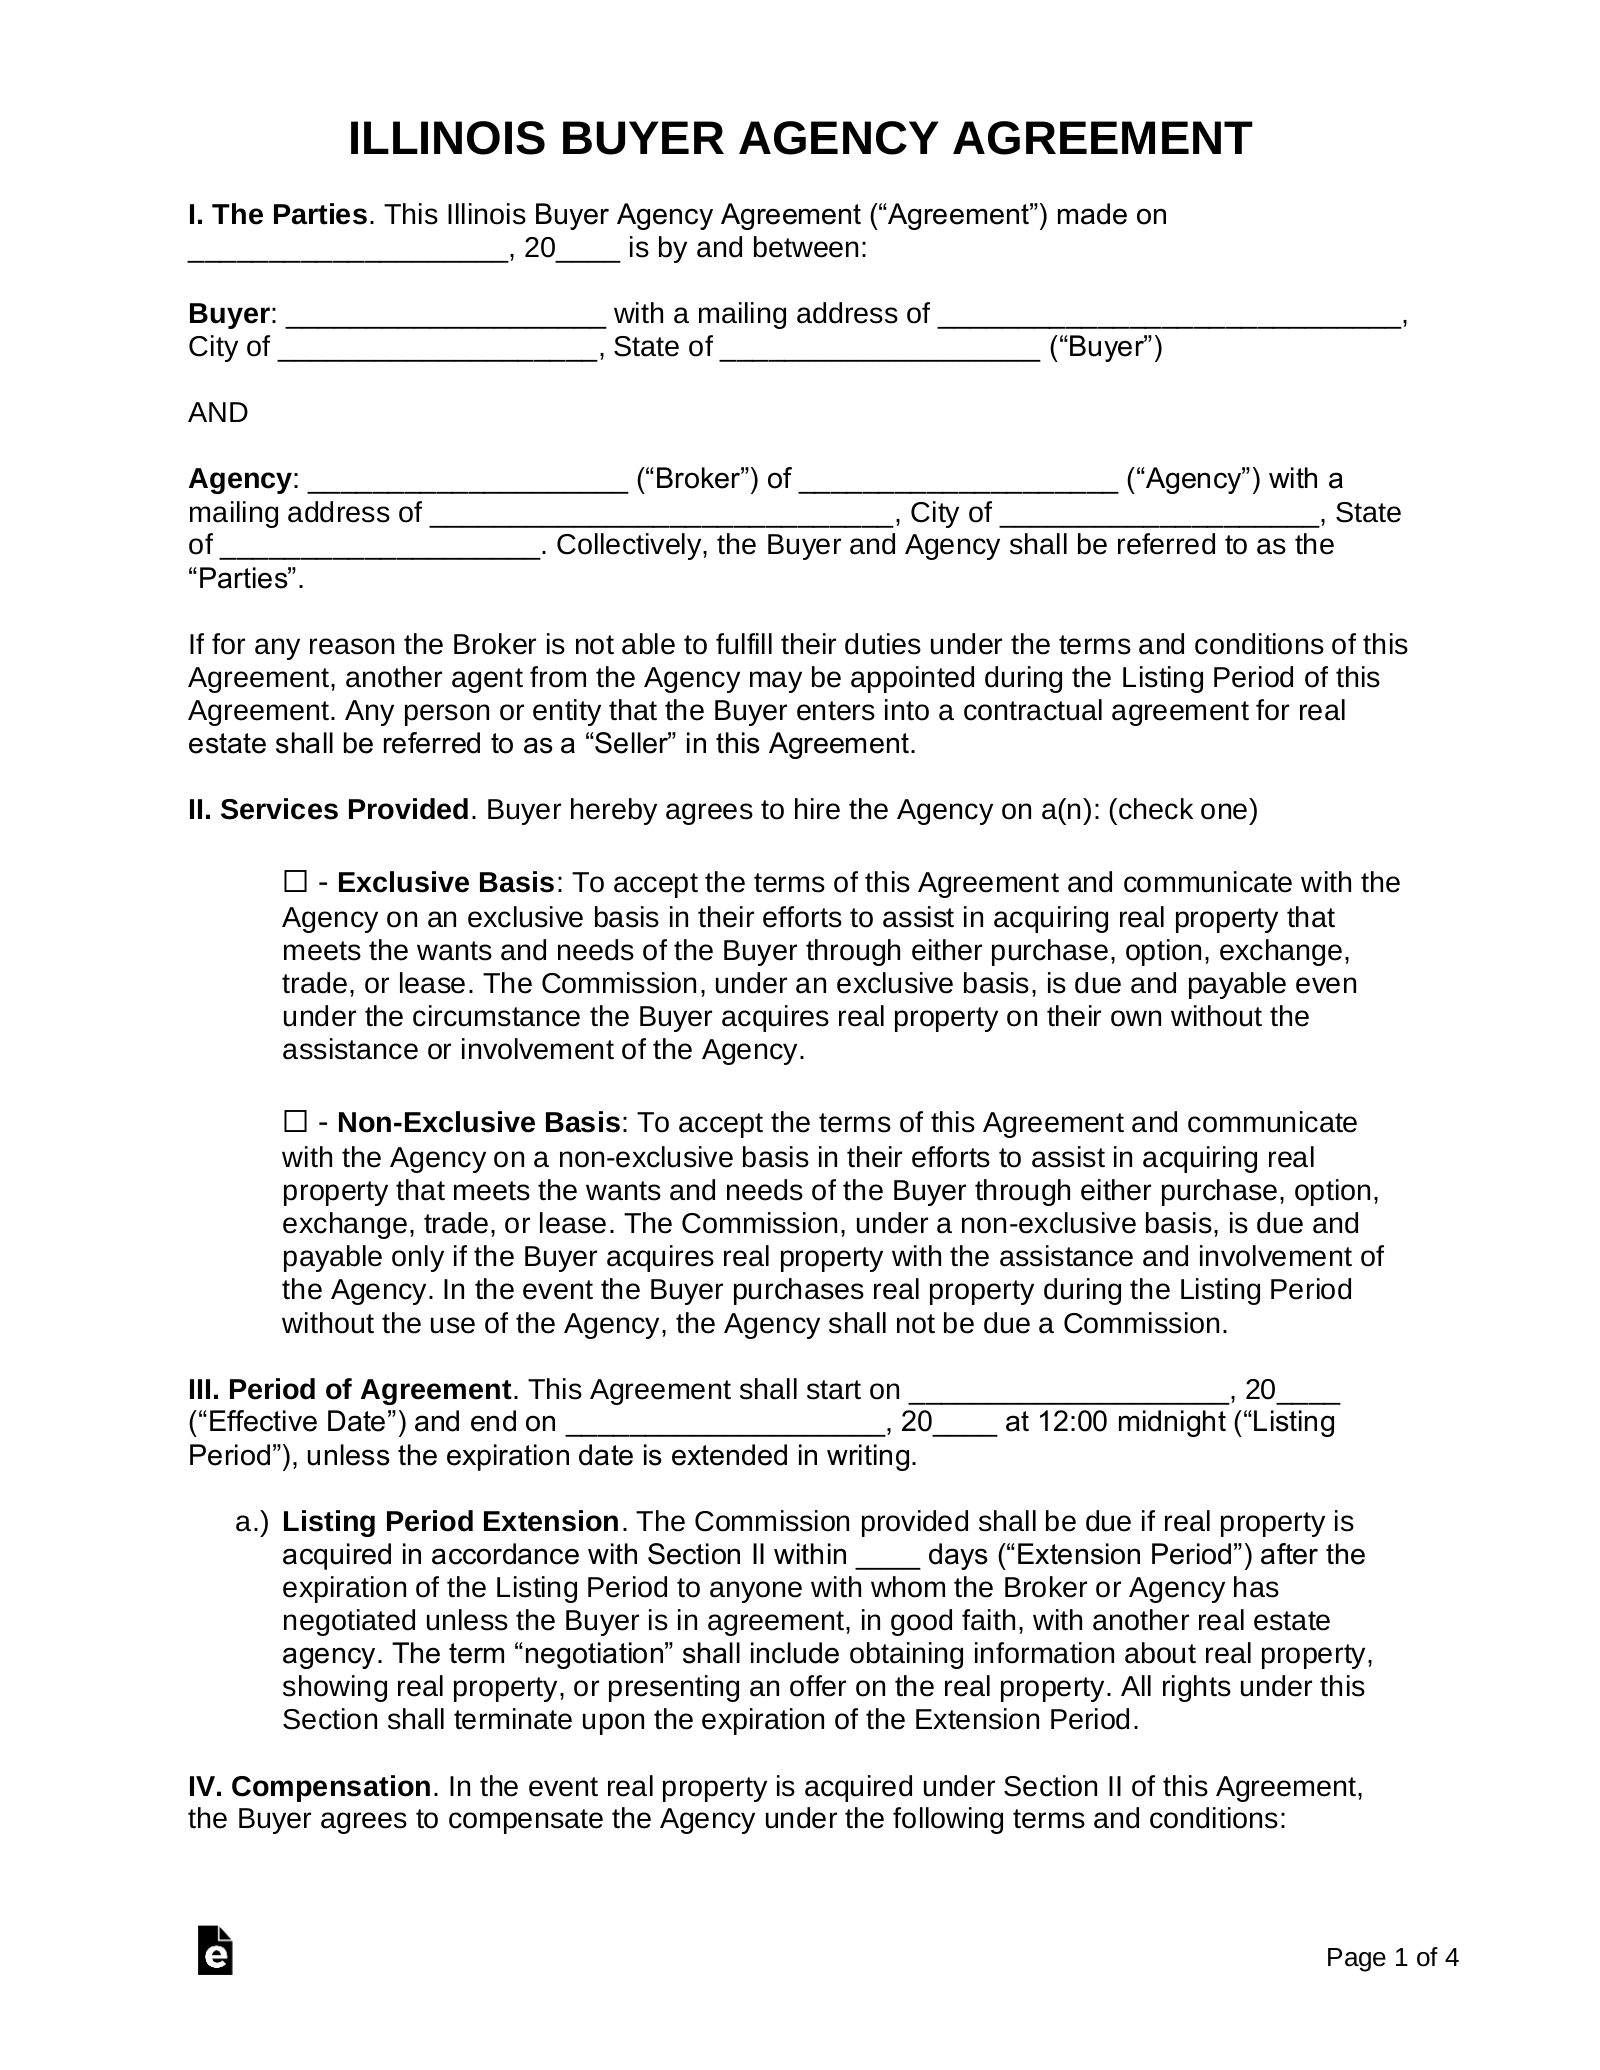 Illinois Buyer Agency Agreement